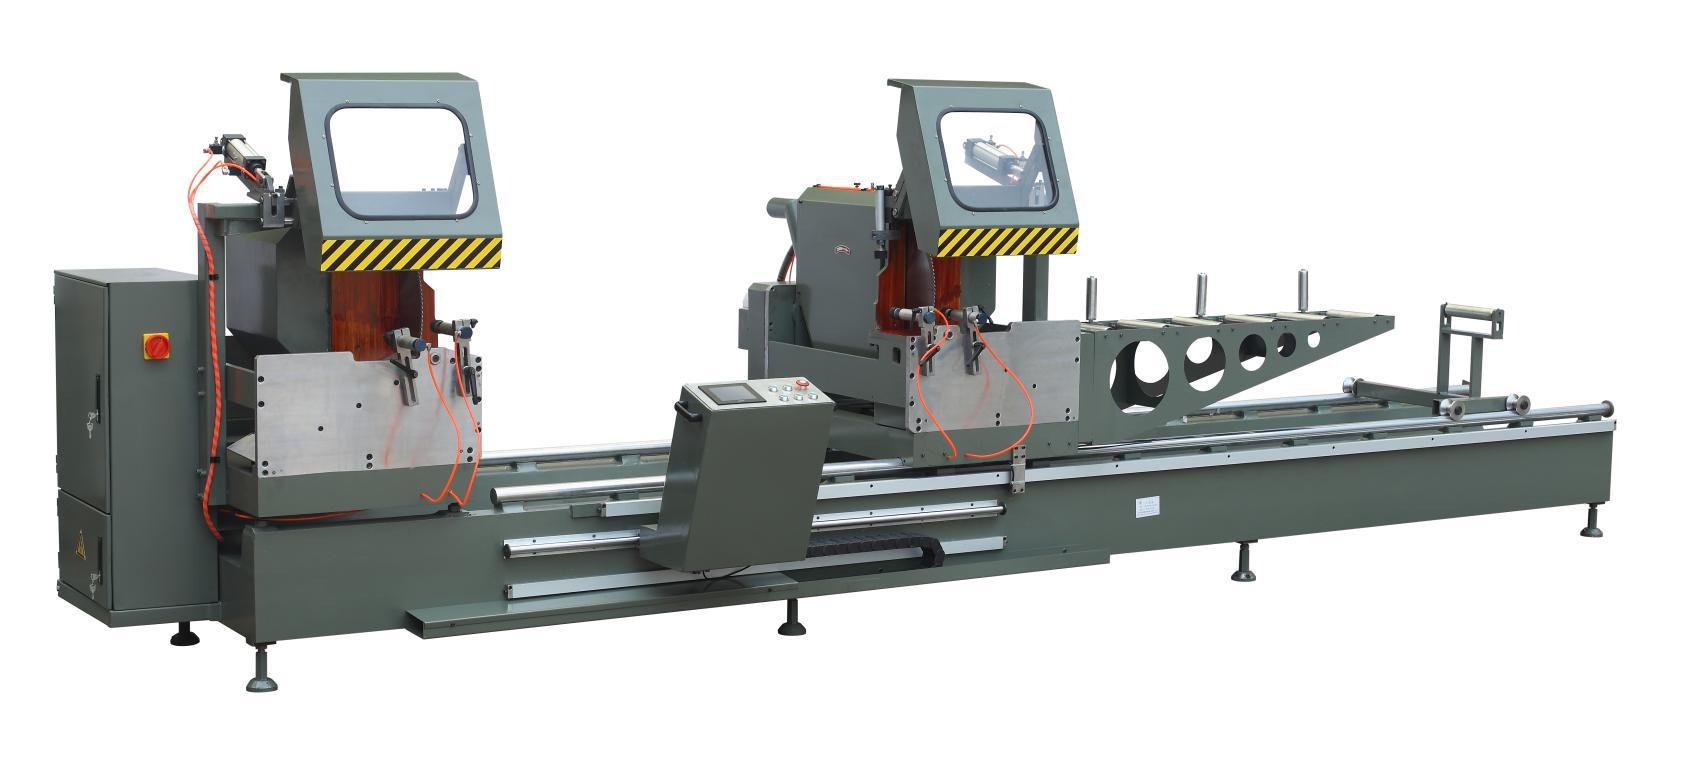 kingtool aluminium machinery KT-383FC CNC DOUBLE MITRE SAW Aluminum Cutting Machine image1